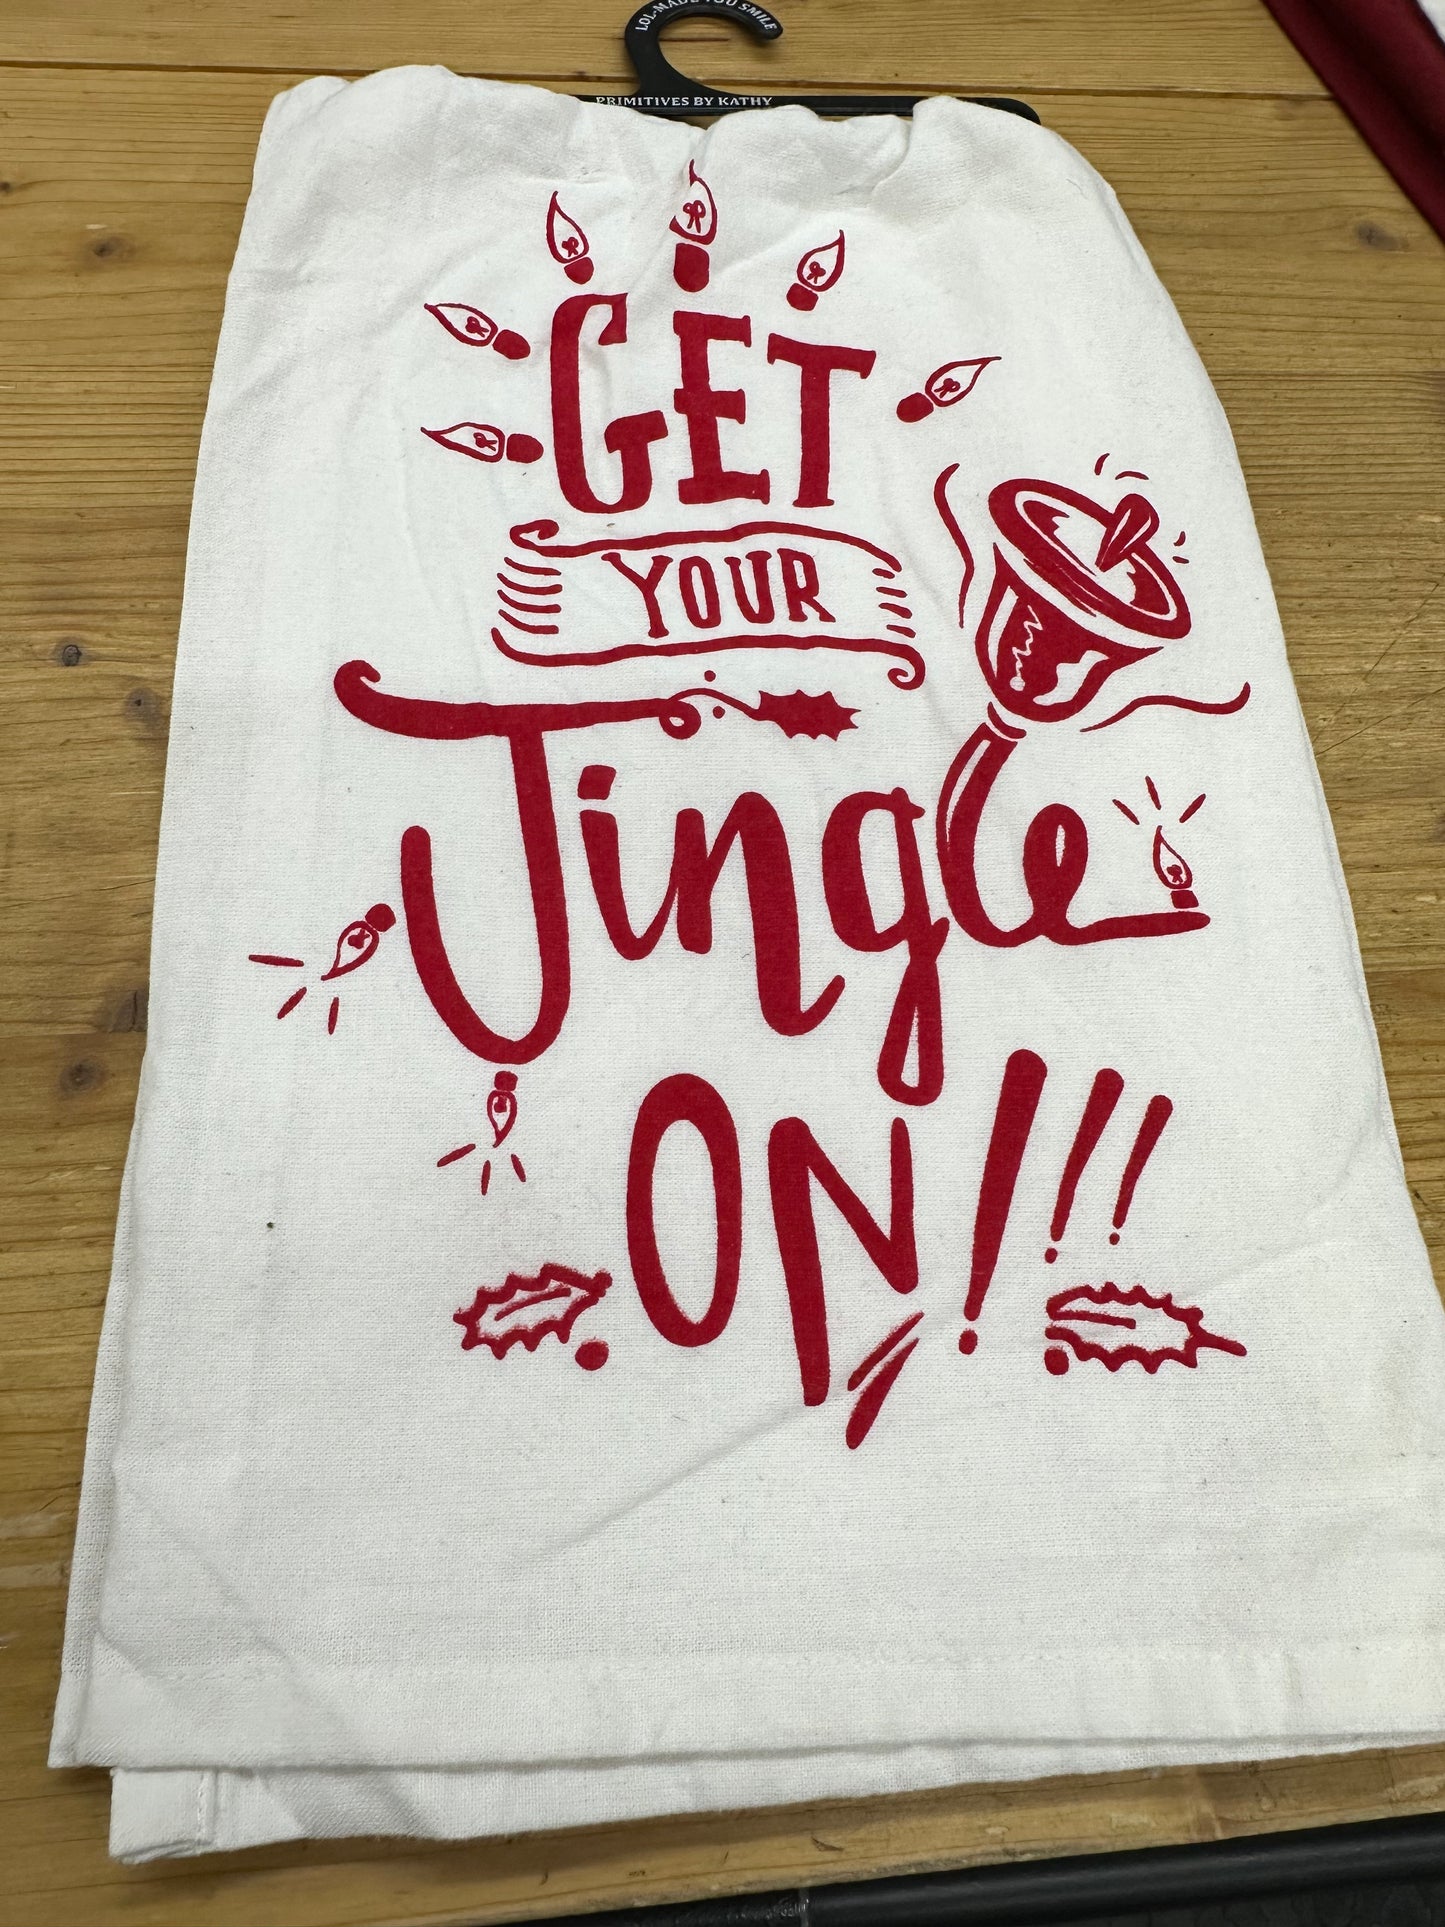 Get your jingle on hand towel